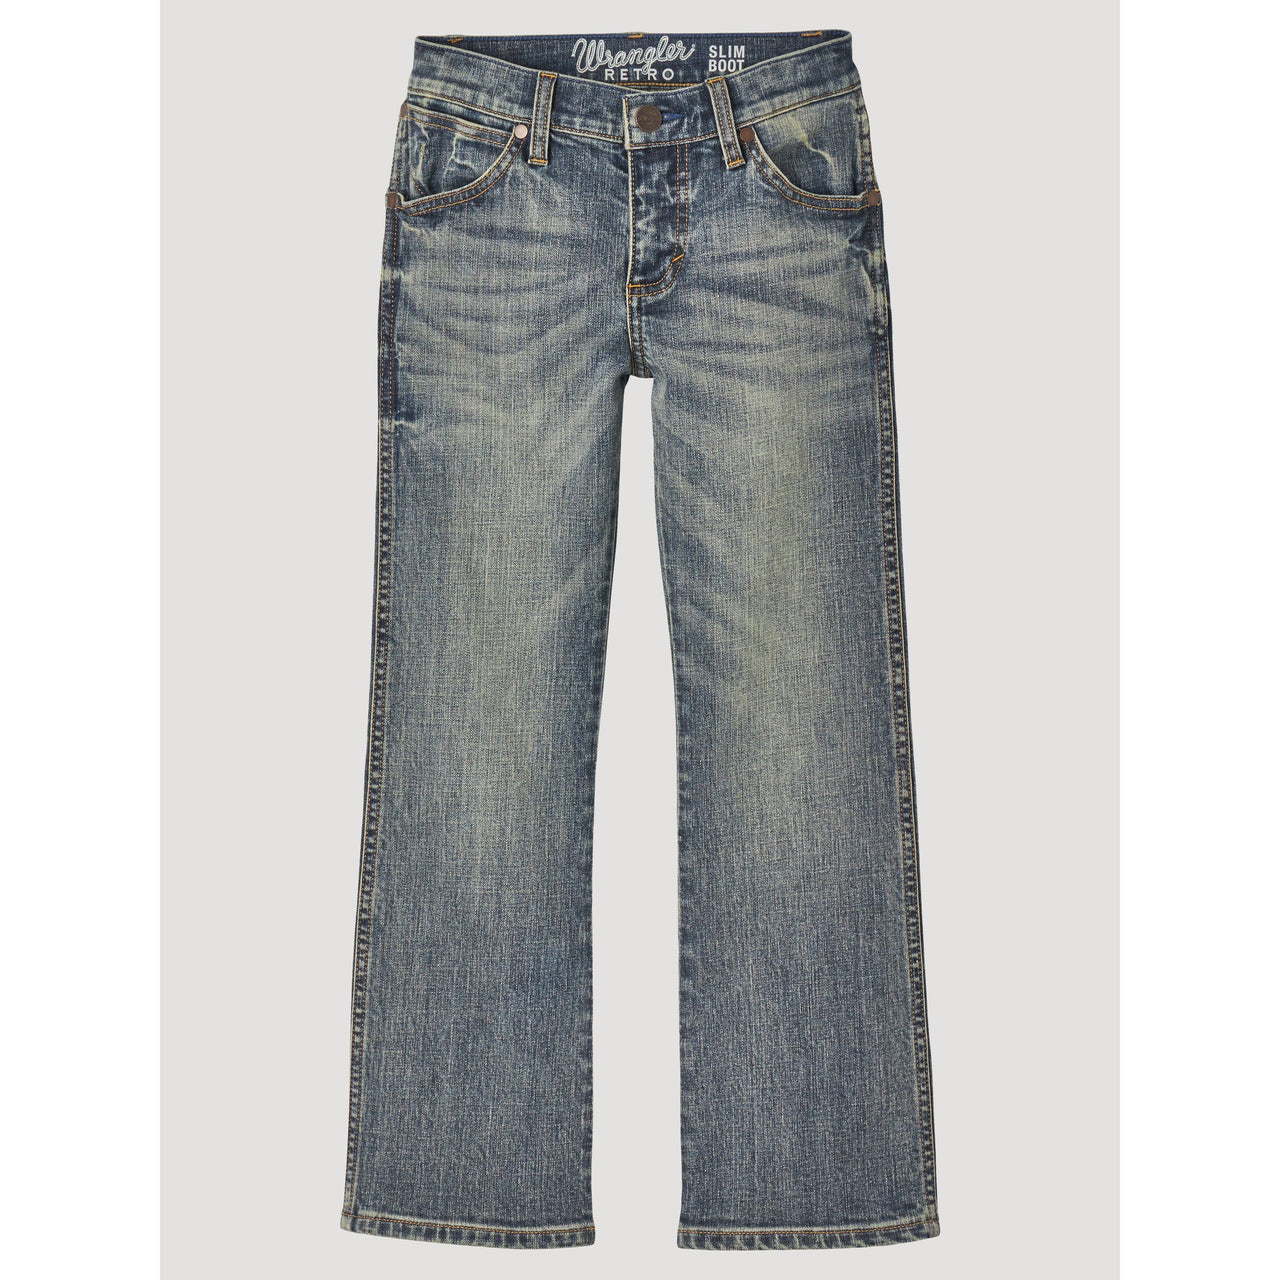 Wrangler Boy's Retro Slim Bootcut Jeans - Greeley